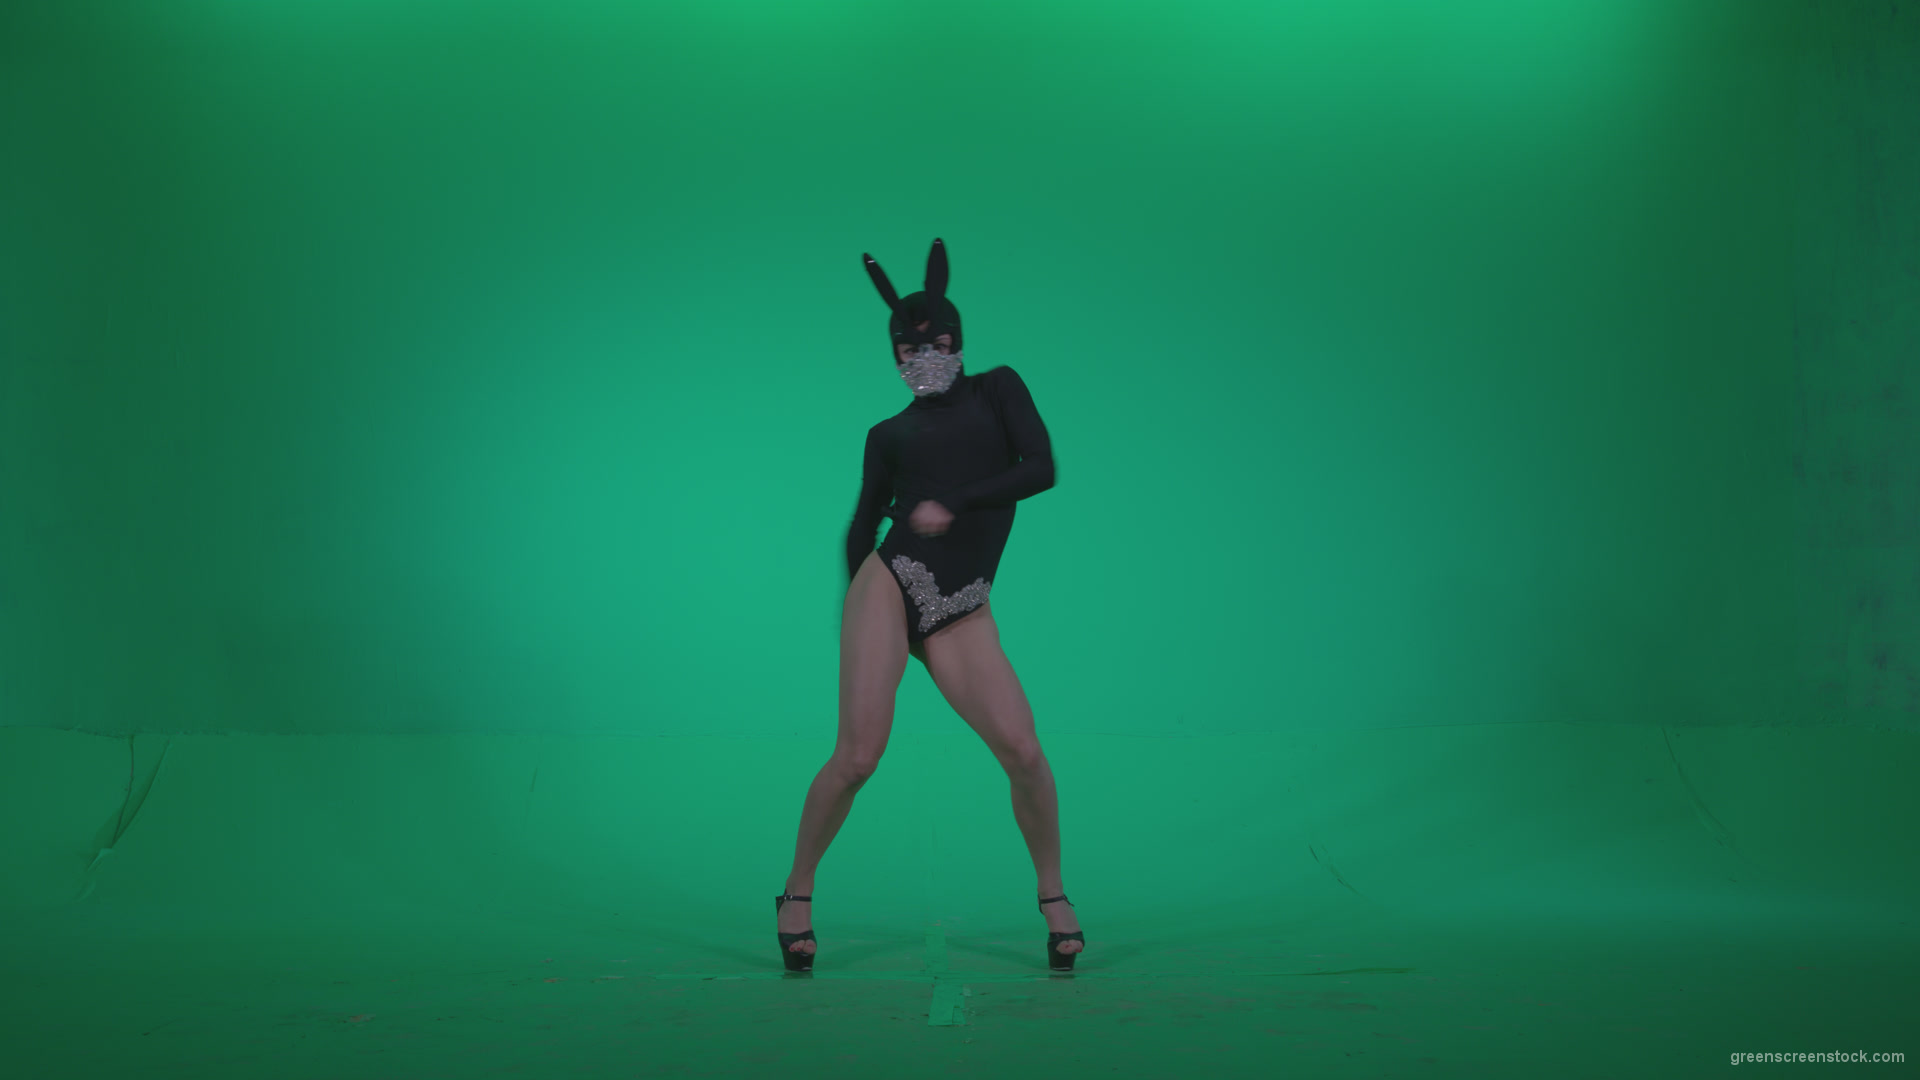 Go-go-Dancer-Black-Rabbit-u9-Green-Screen-Video-Footage_006 Green Screen Stock